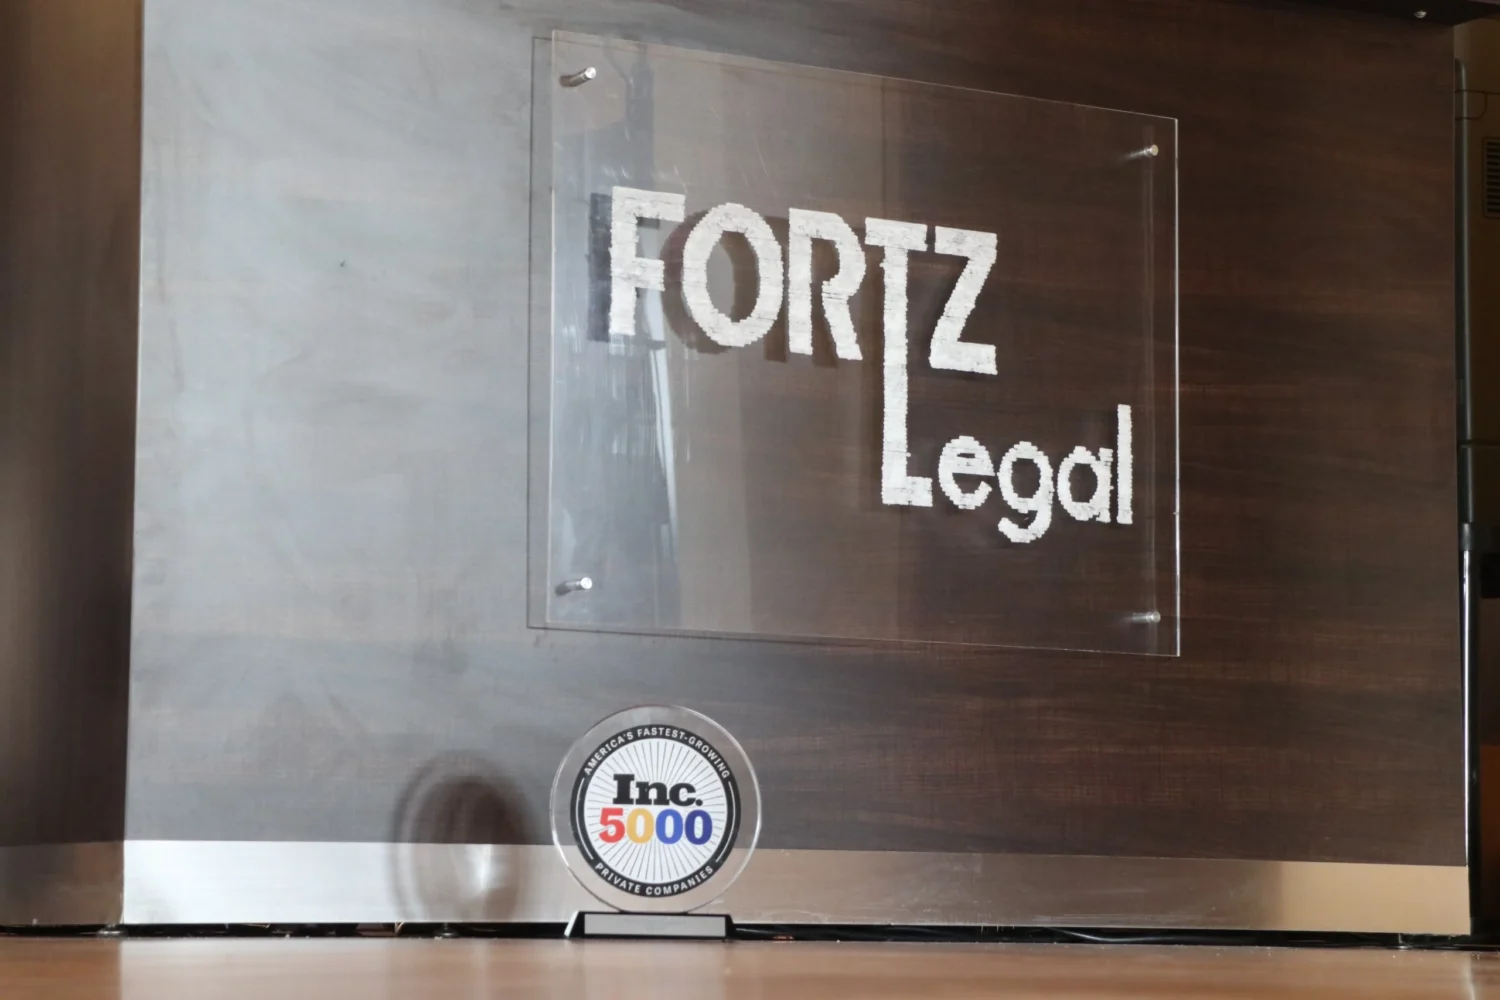 Fortz Legal Inc. 5000